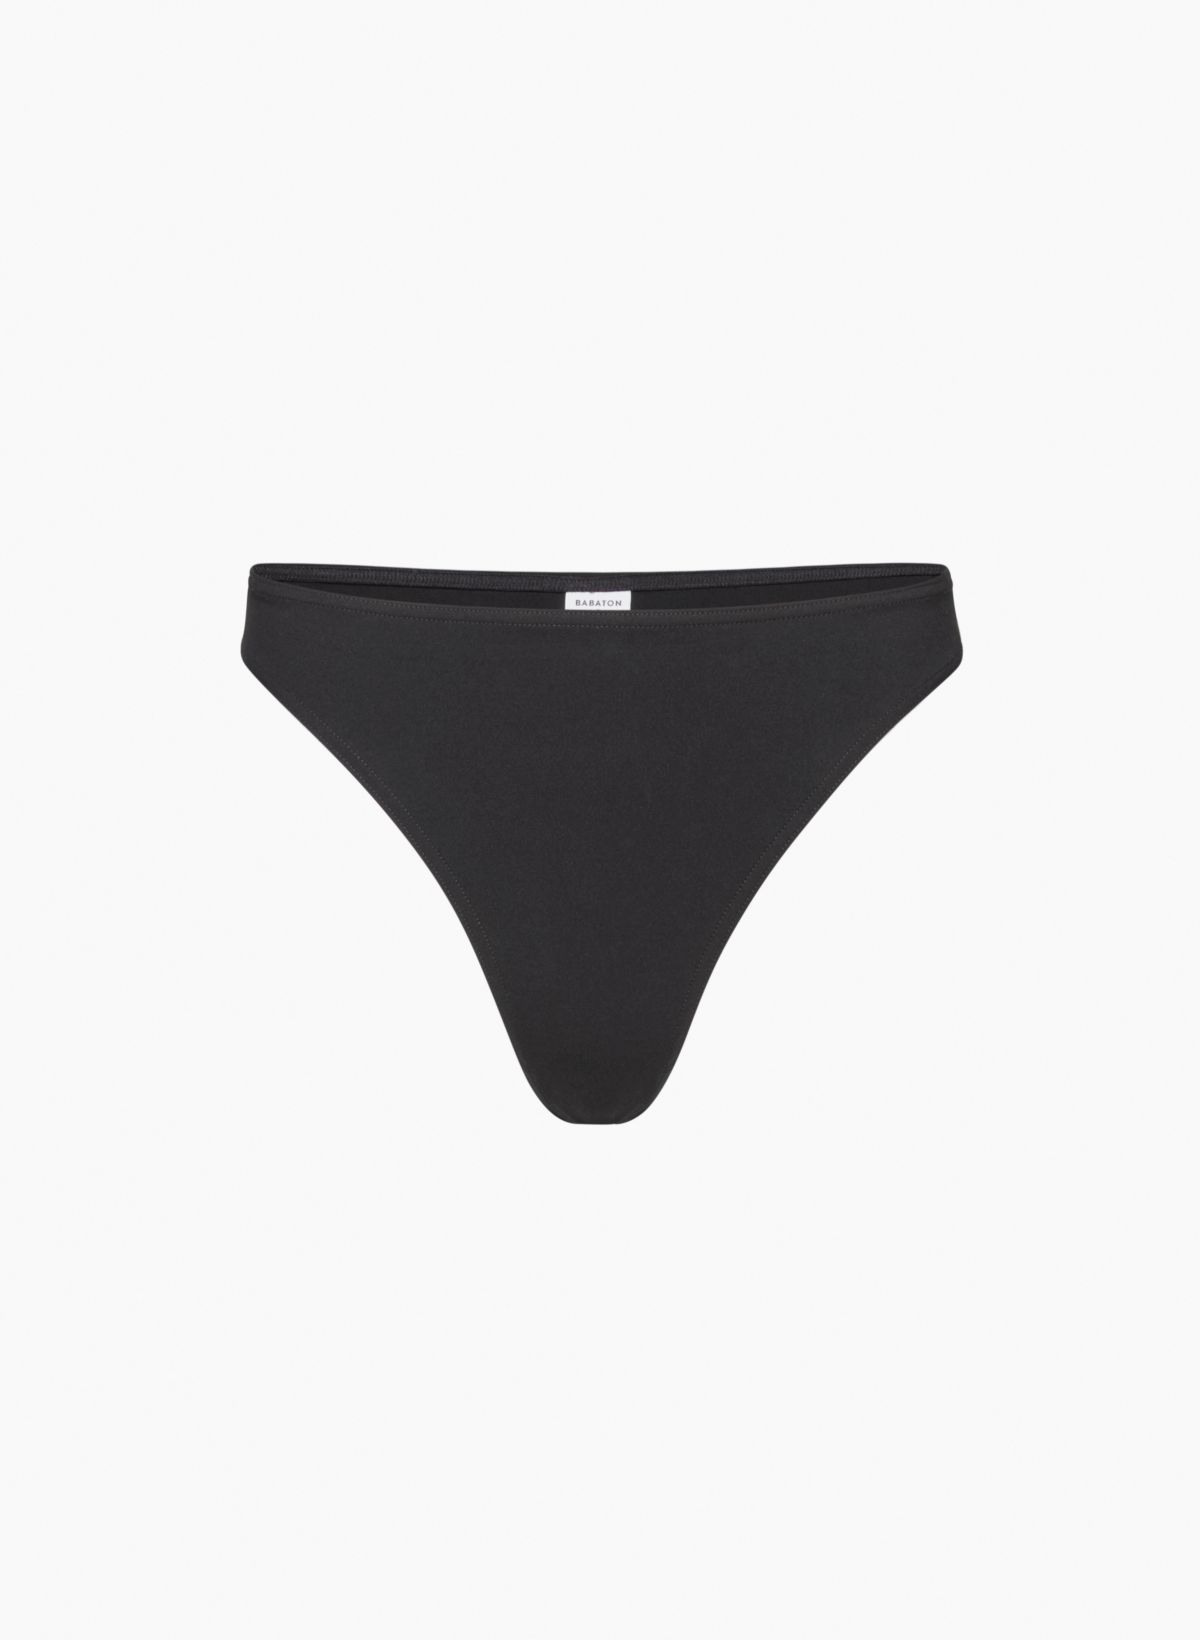 Black Women Lingerie Wet Look Open Crotch High Cut Panties Mini Briefs Pants